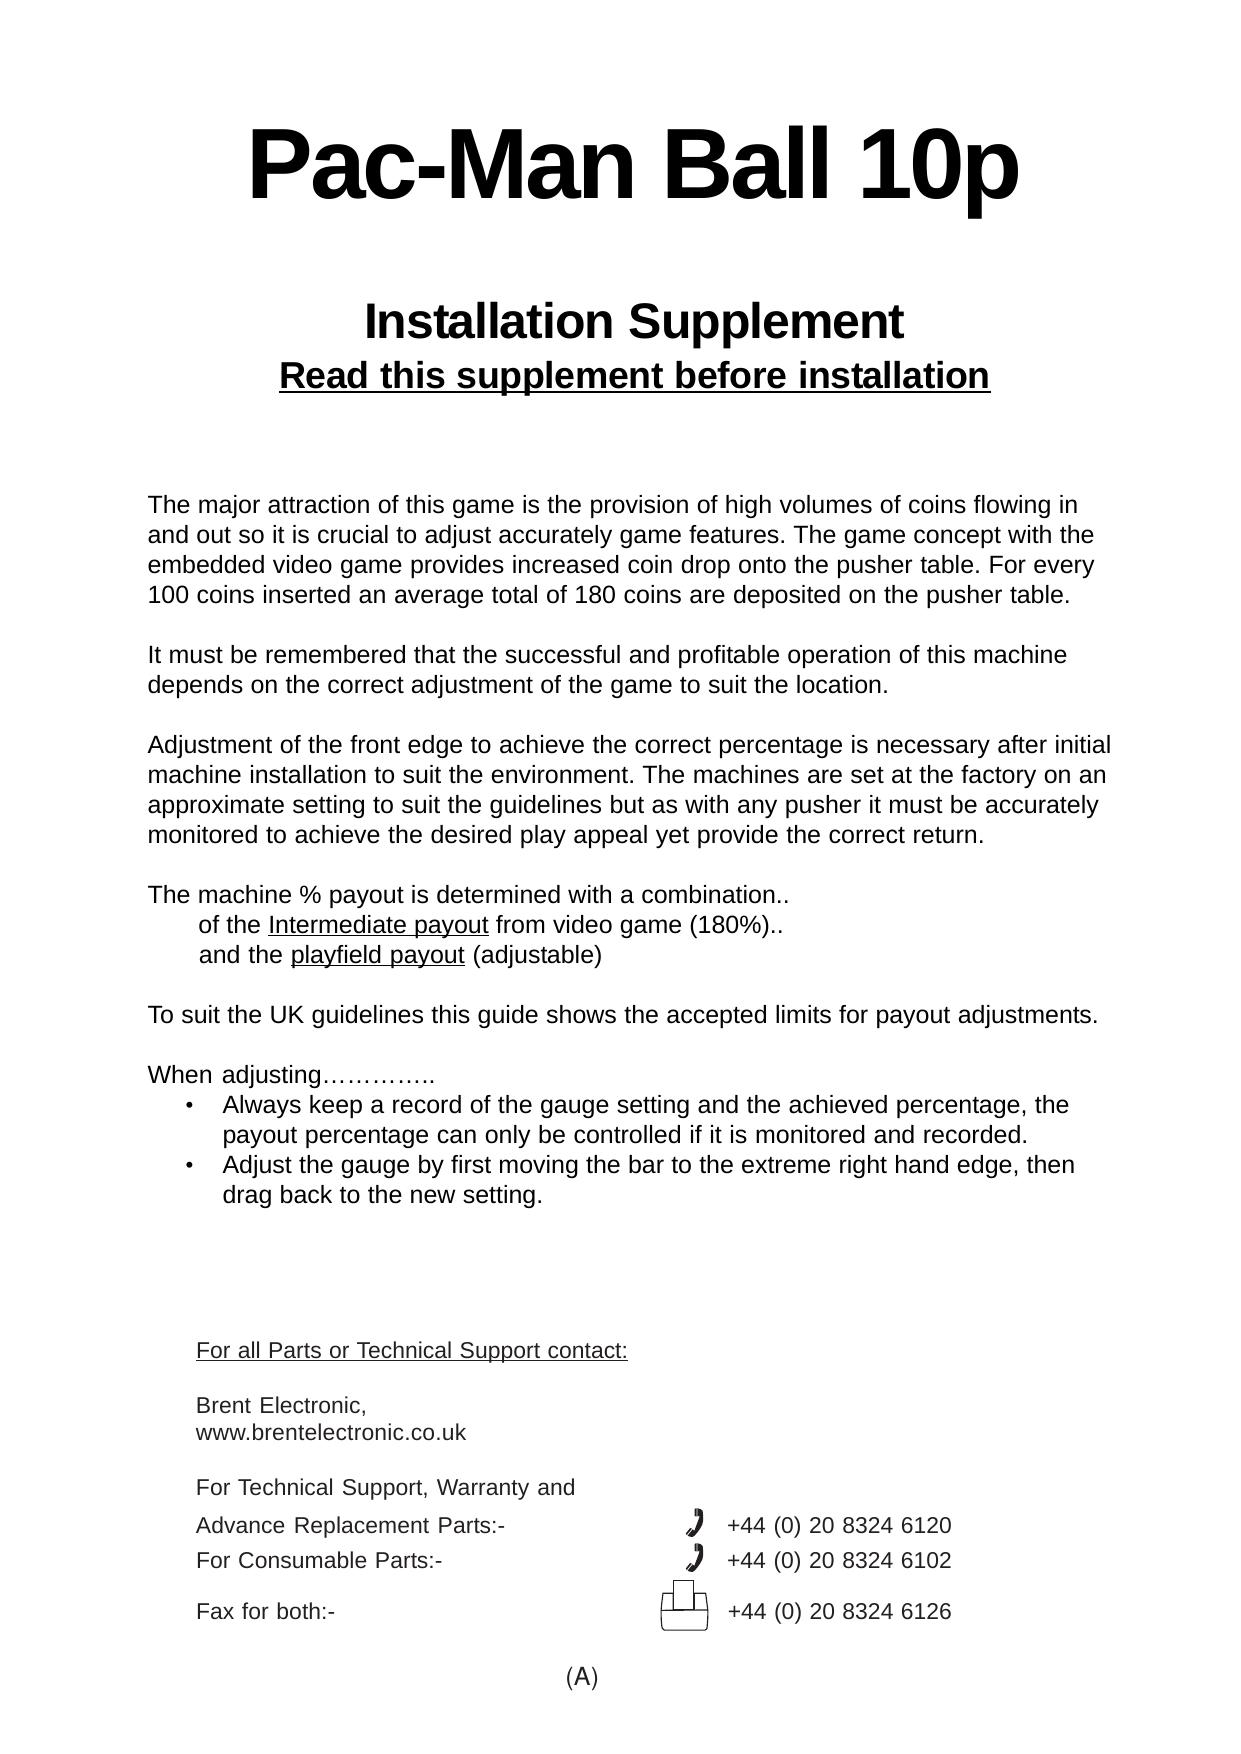 Installation Supplement Manual 10p